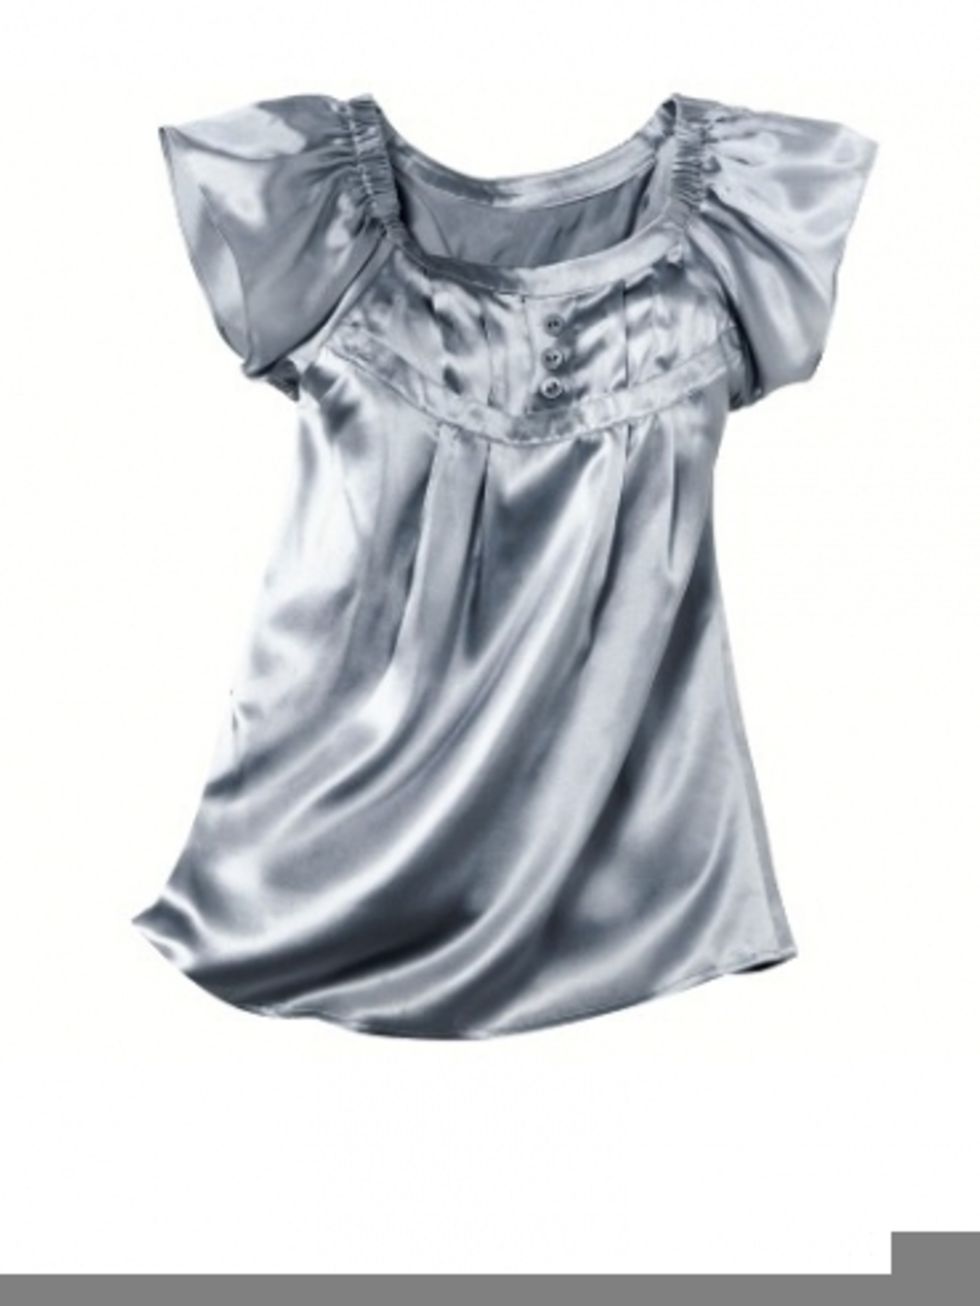 Dress, White, One-piece garment, Day dress, Pattern, Sleeveless shirt, Fashion design, Silver, Satin, Pattern, 